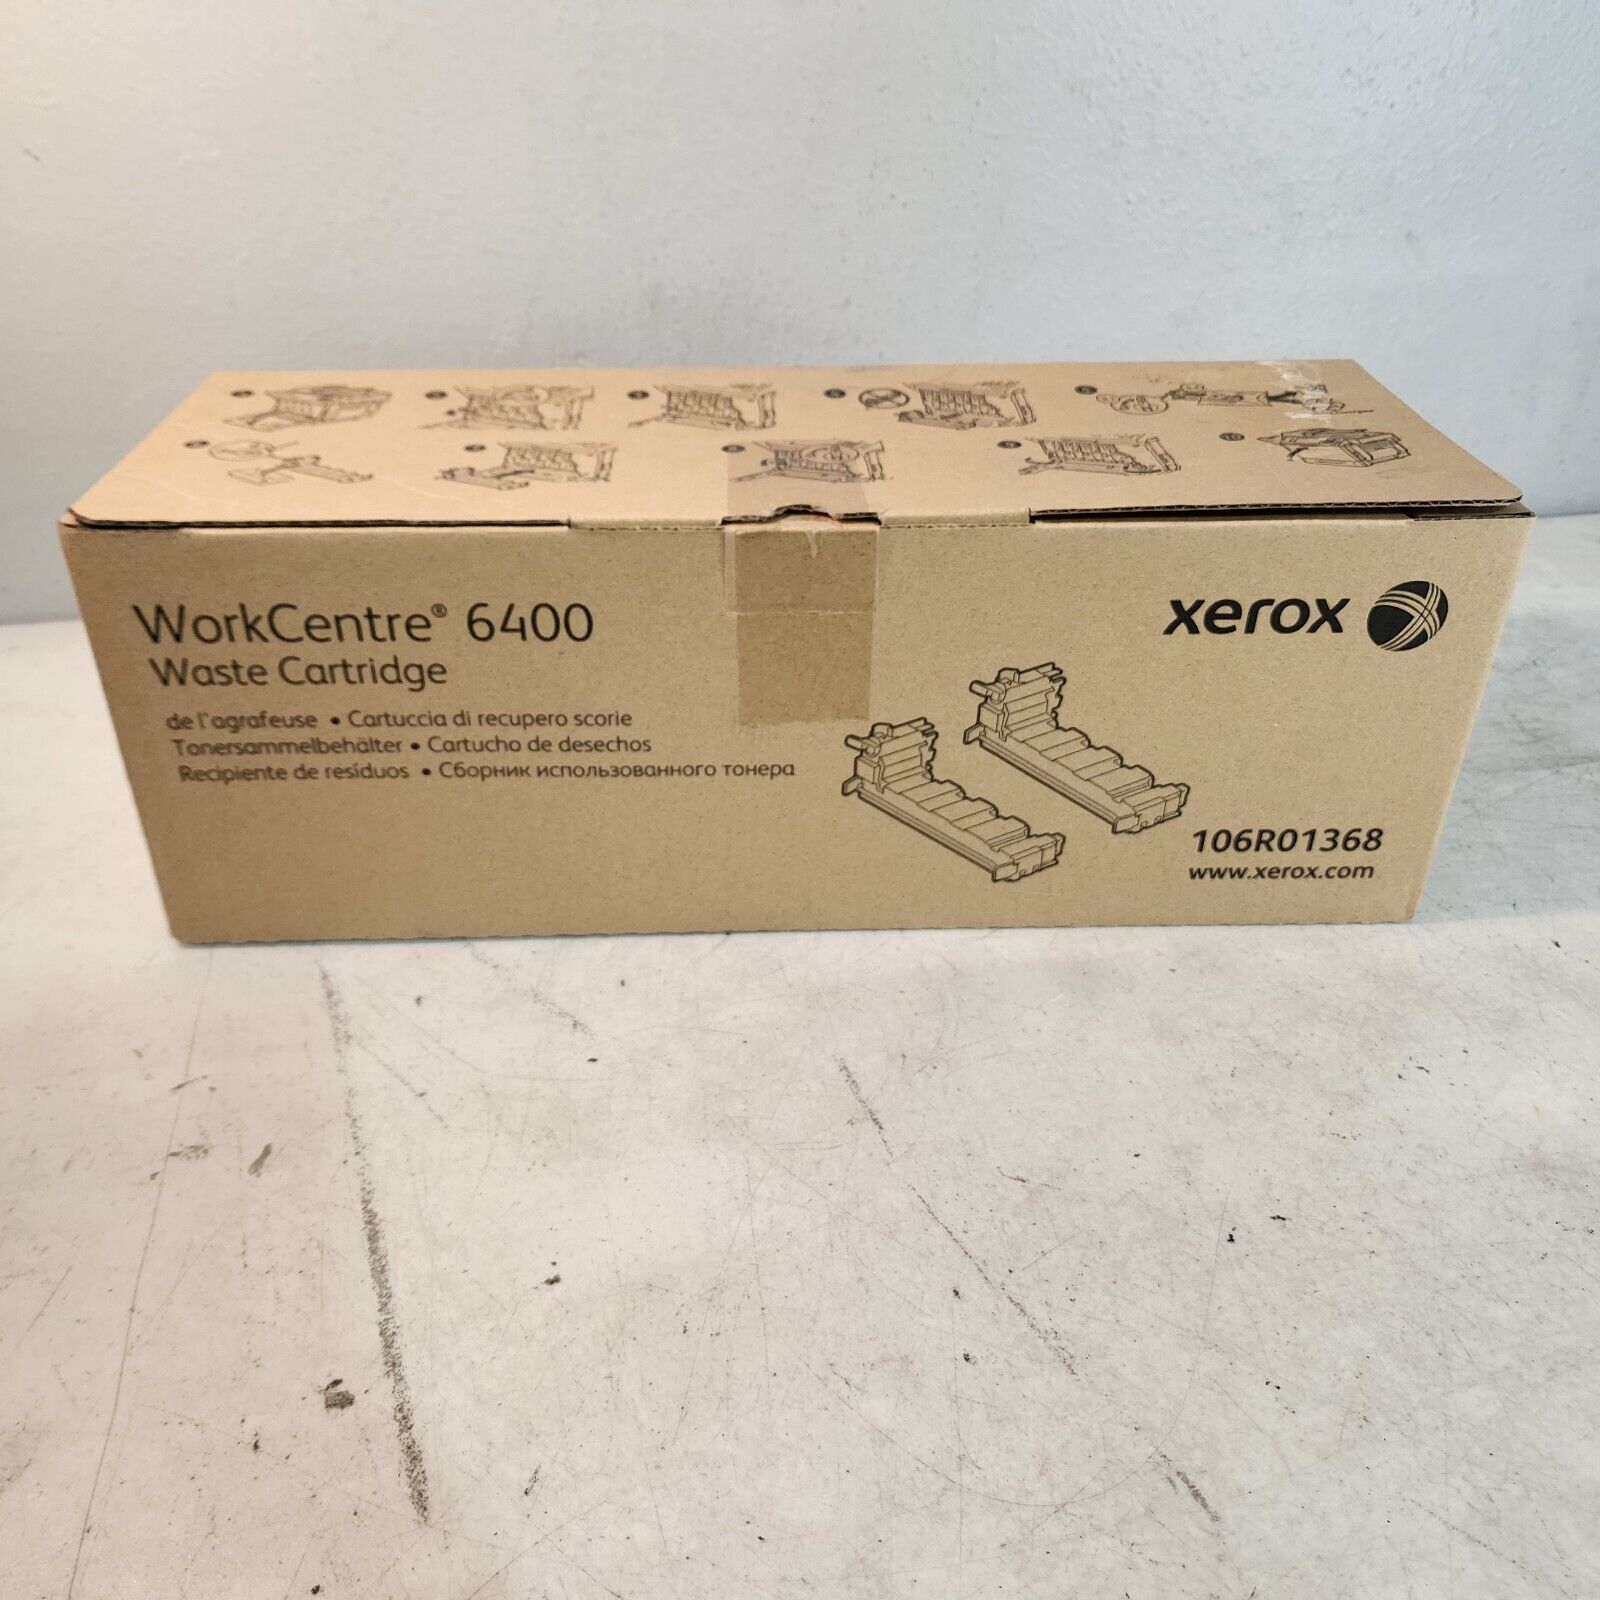 Xerox 106R01368 WorkCentre 6400 Waste Cartridge Genuine New OEM Sealed Box